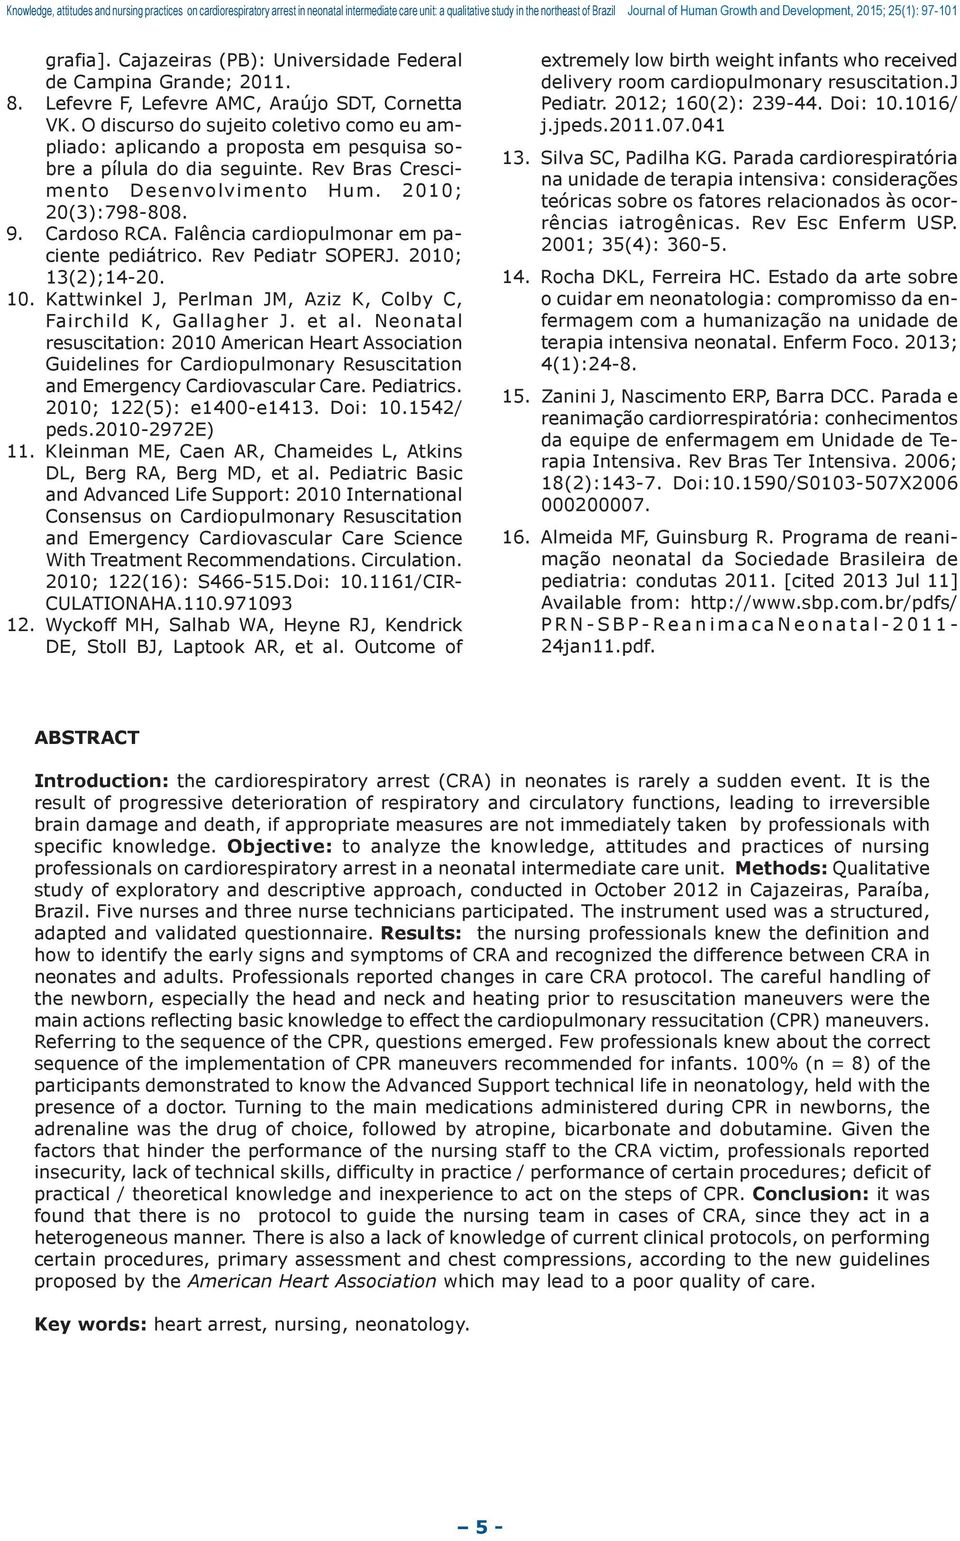 Falência cardiopulmonar em paciente pediátrico. Rev Pediatr SOPERJ. 2010; 13(2);14-20. 10. Kattwinkel J, Perlman JM, Aziz K, Colby C, Fairchild K, Gallagher J. et al.